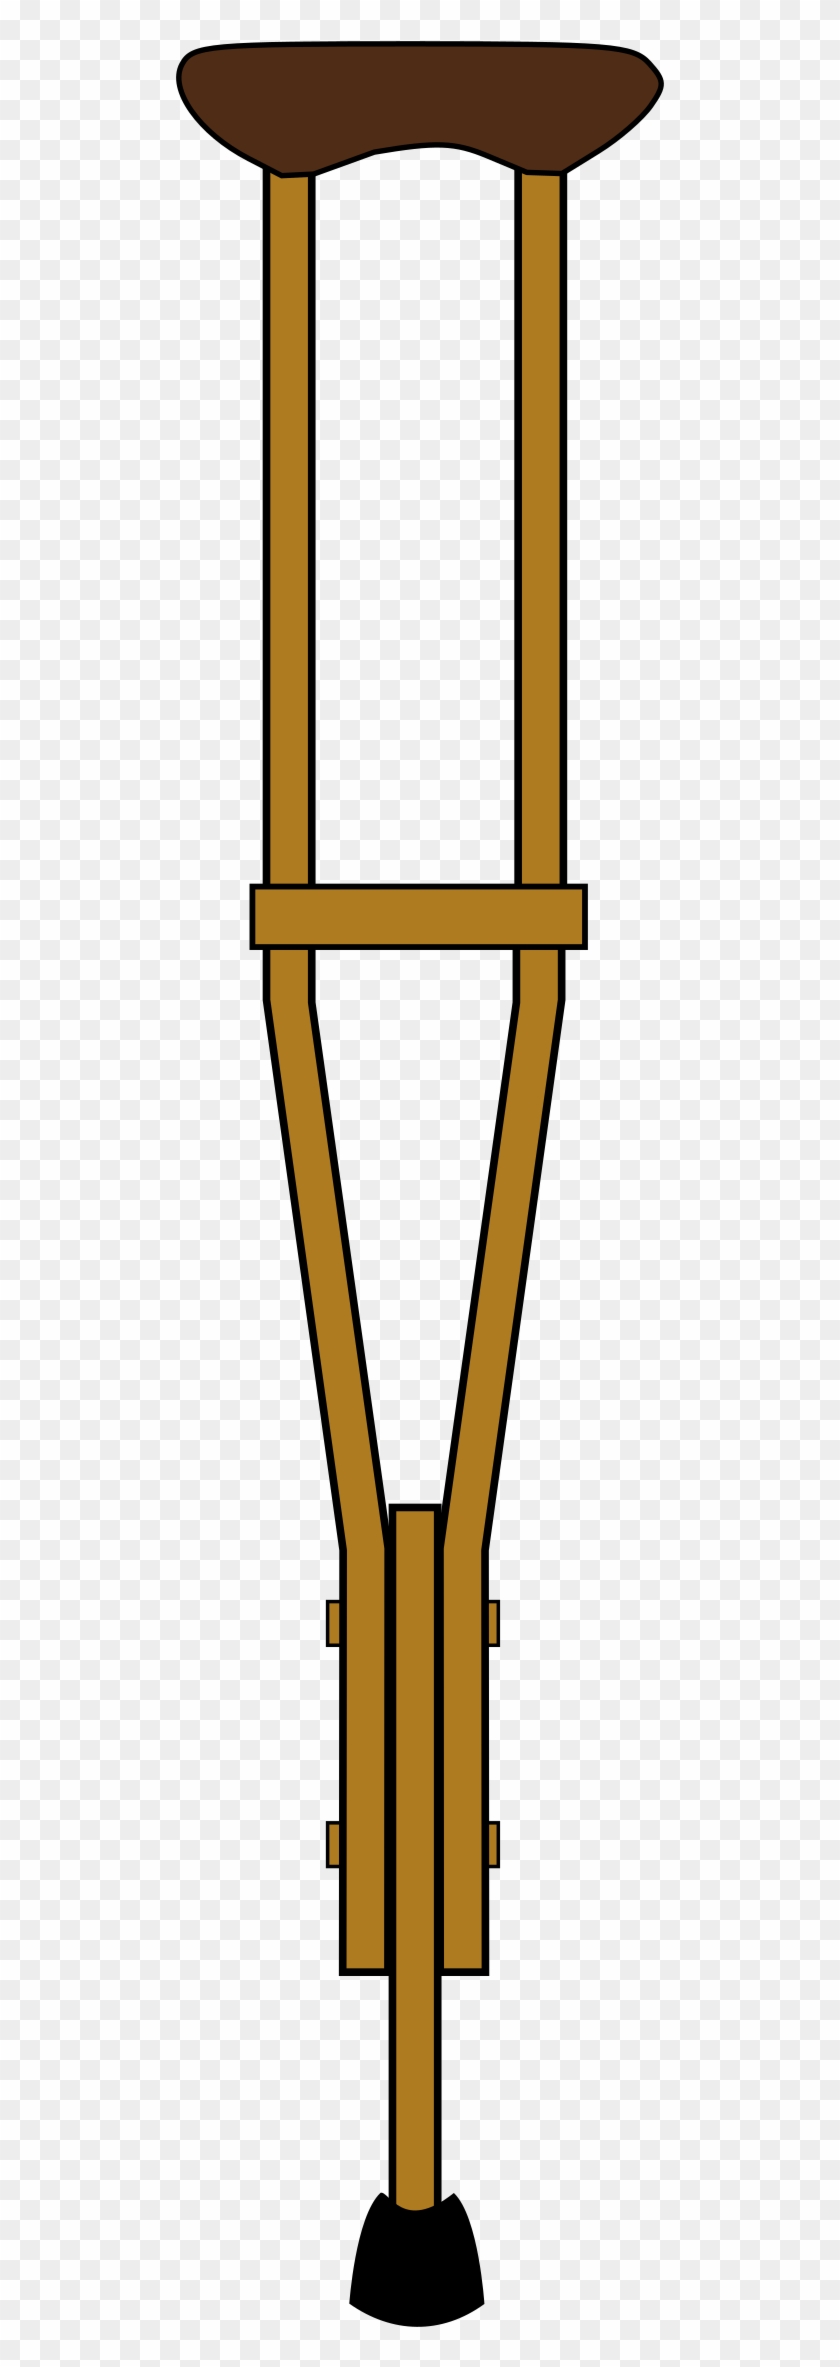 Wooden Crutch - Crutches Clipart Png #426346